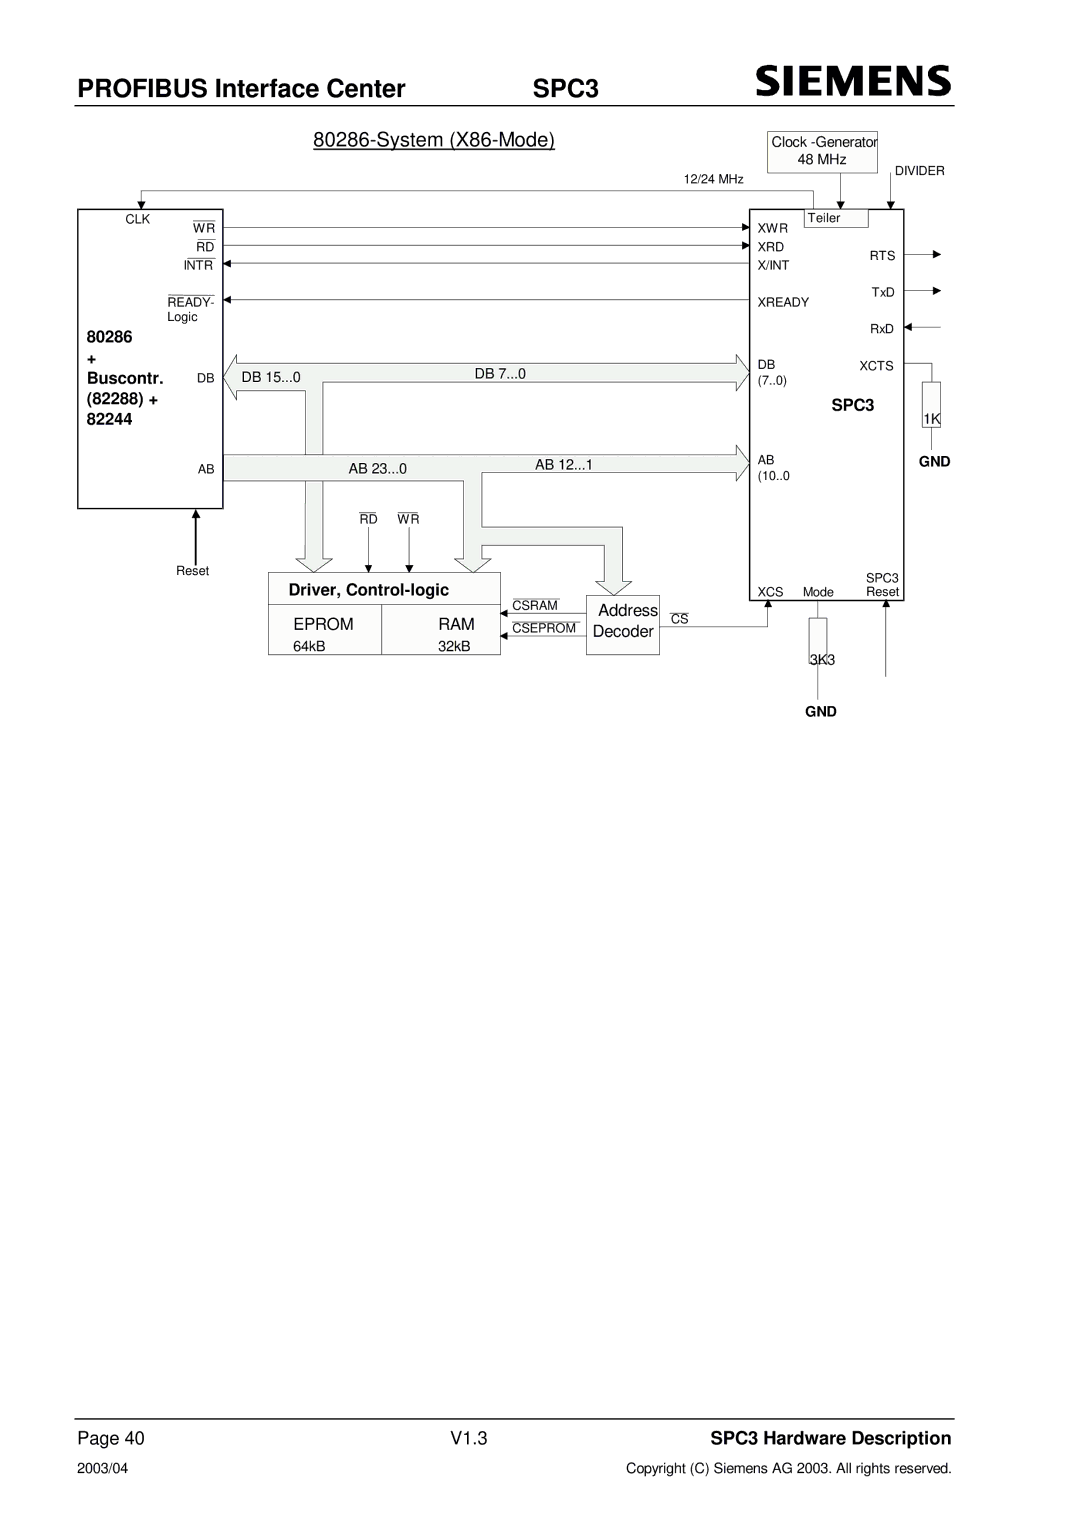 Siemens SPC3 manual System X86-Mode 